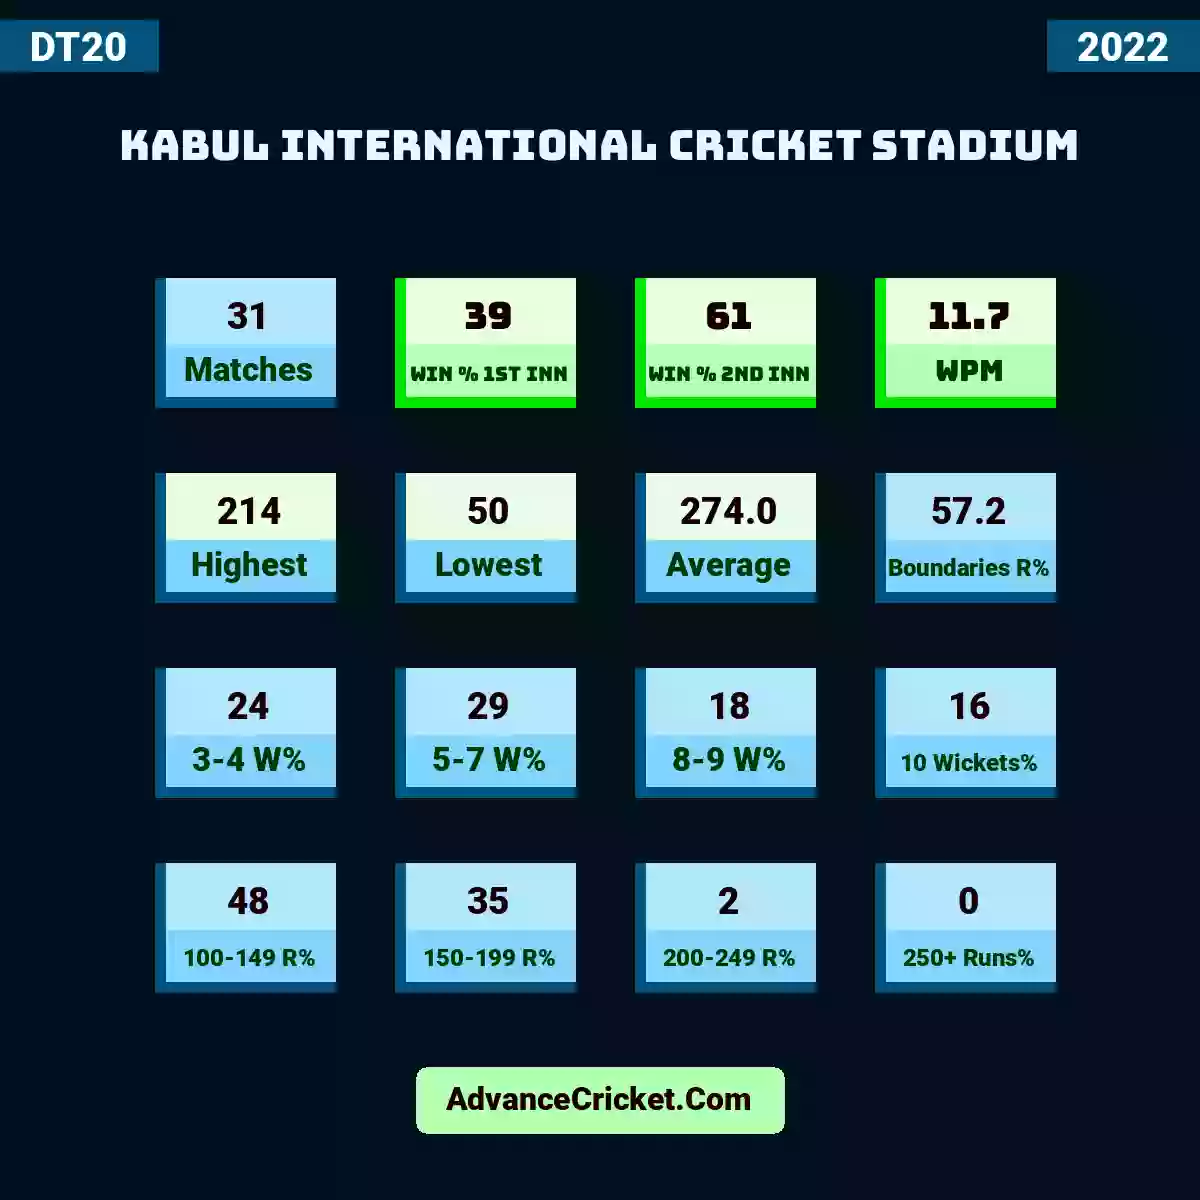 Image showing Kabul International Cricket Stadium with Matches: 31, Win % 1st Inn: 39, Win % 2nd Inn: 61, WPM: 11.7, Highest: 214, Lowest: 50, Average: 274.0, Boundaries R%: 57.2, 3-4 W%: 24, 5-7 W%: 29, 8-9 W%: 18, 10 Wickets%: 16, 100-149 R%: 48, 150-199 R%: 35, 200-249 R%: 2, 250+ Runs%: 0.